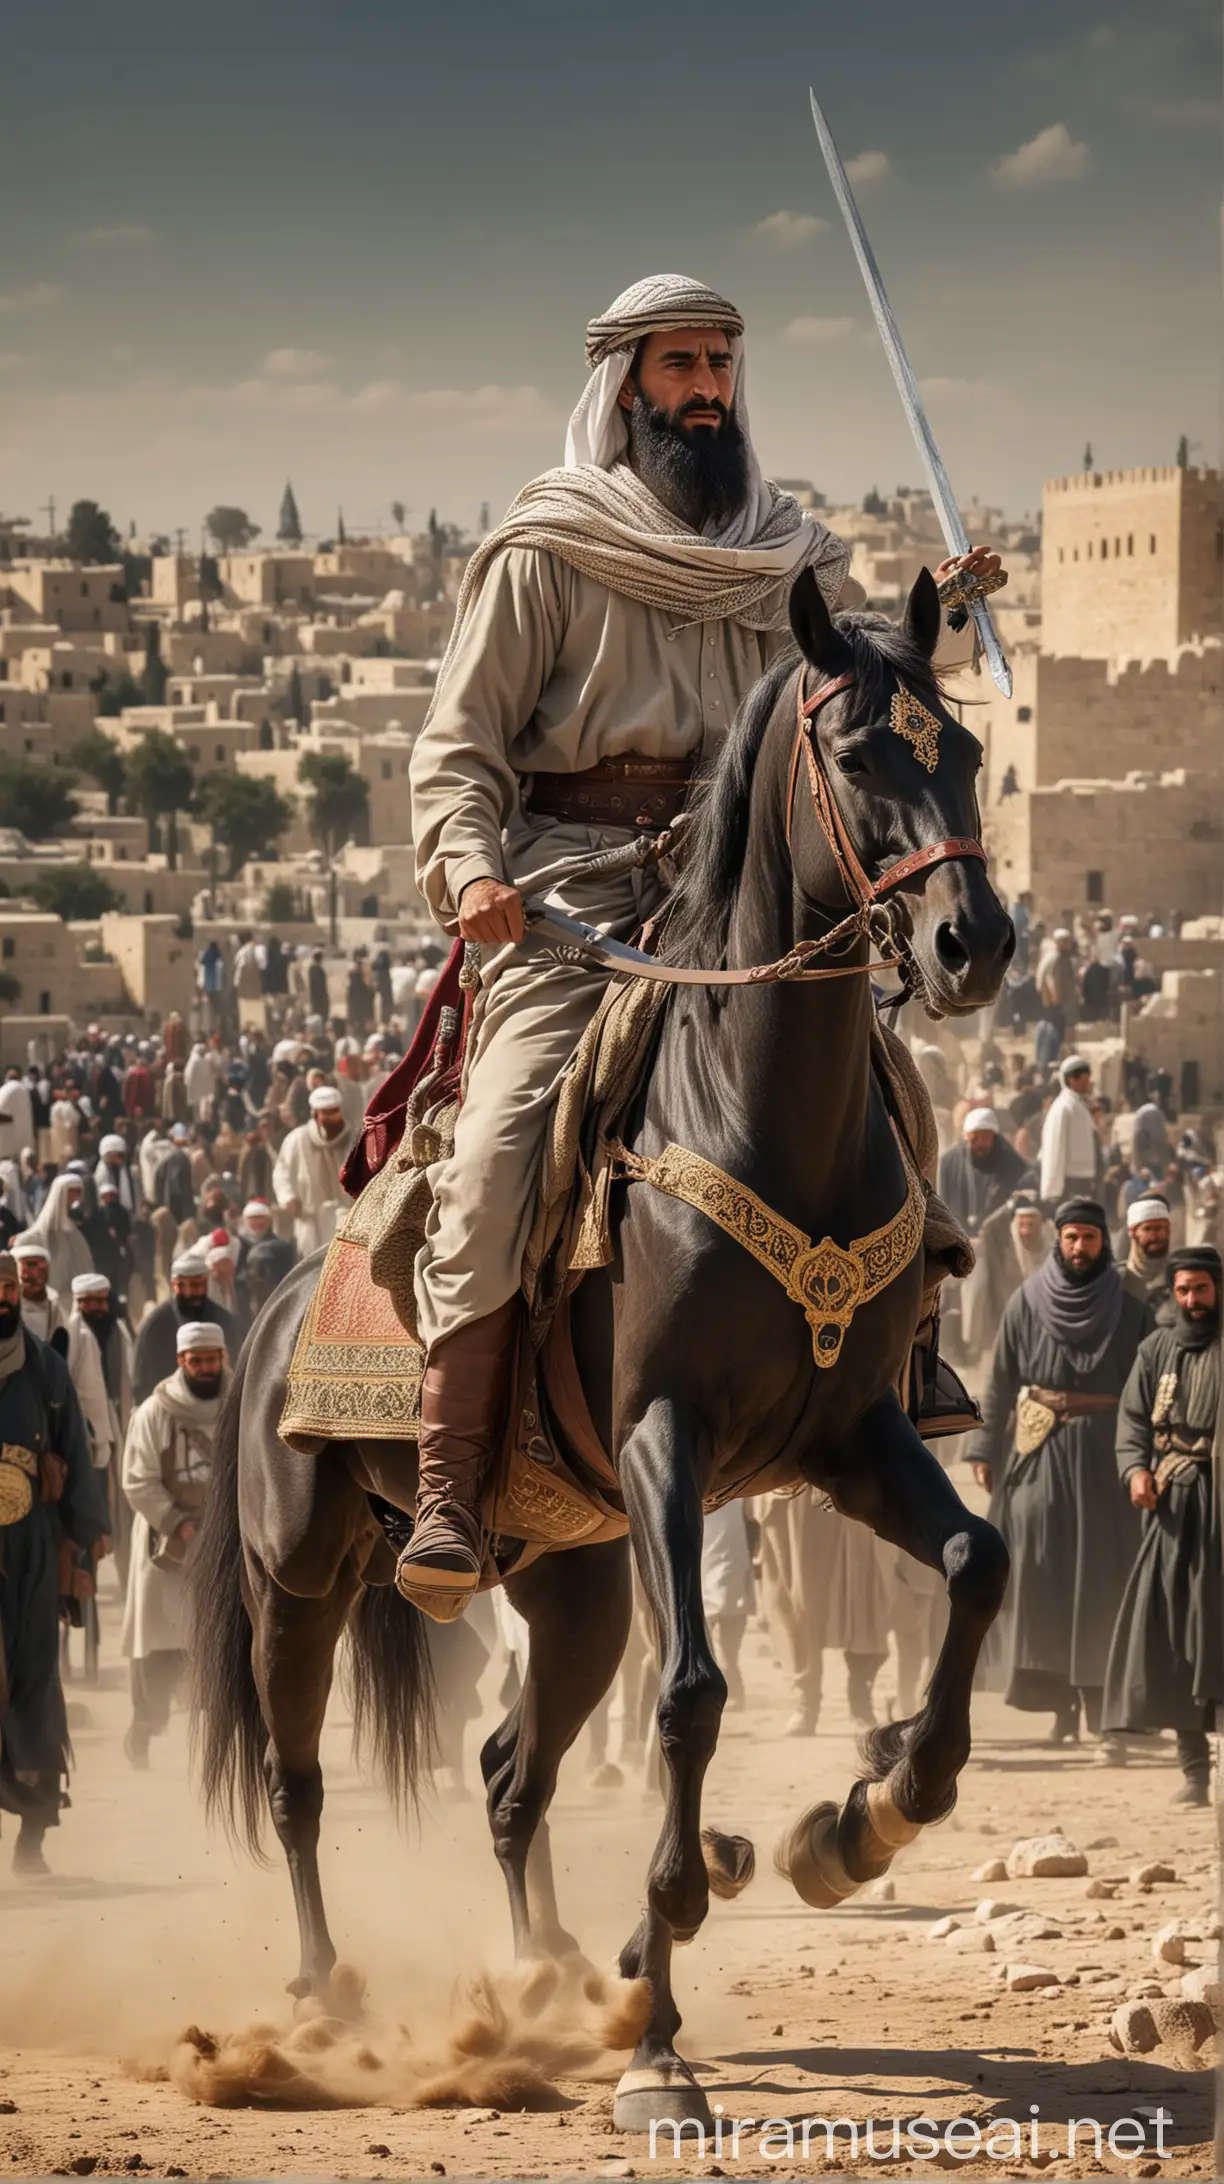 Sultan Salahuddin Eyyubi Leading His Army in 11th Century Jerusalem on Horseback